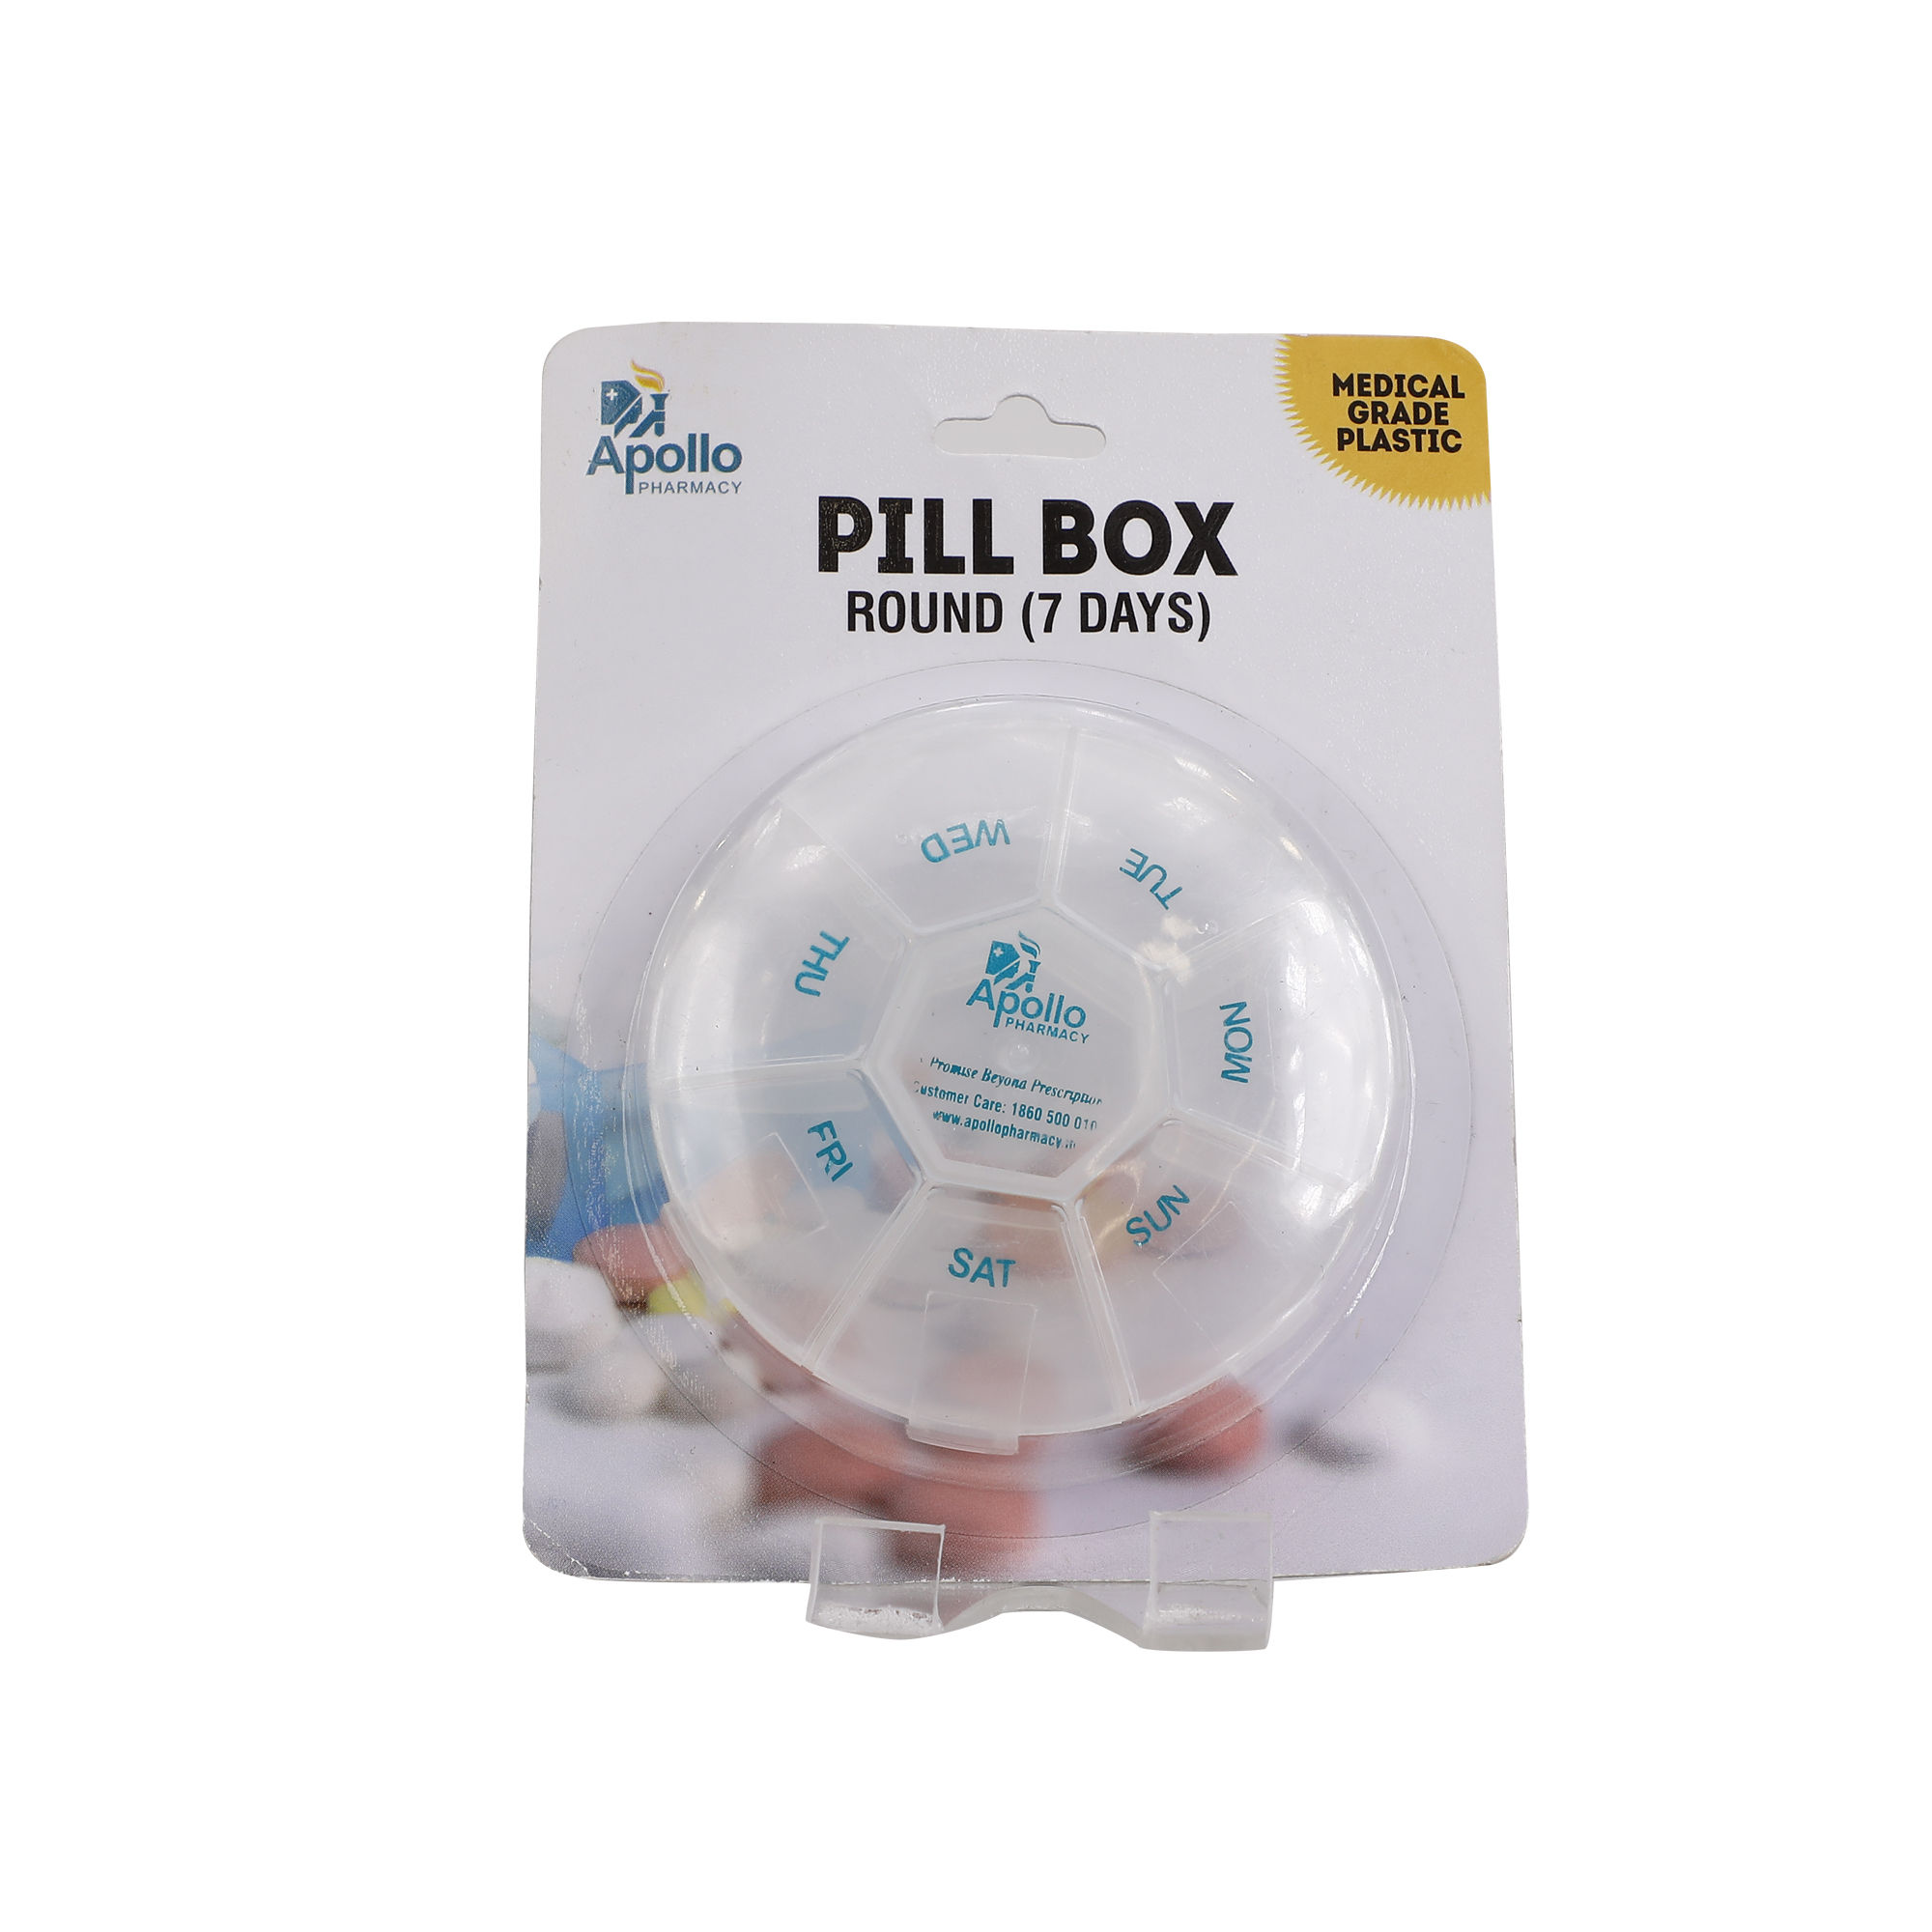 Apollo Pharmacy Pill Box Round 7 Days, 1 Kit, Pack of 1 